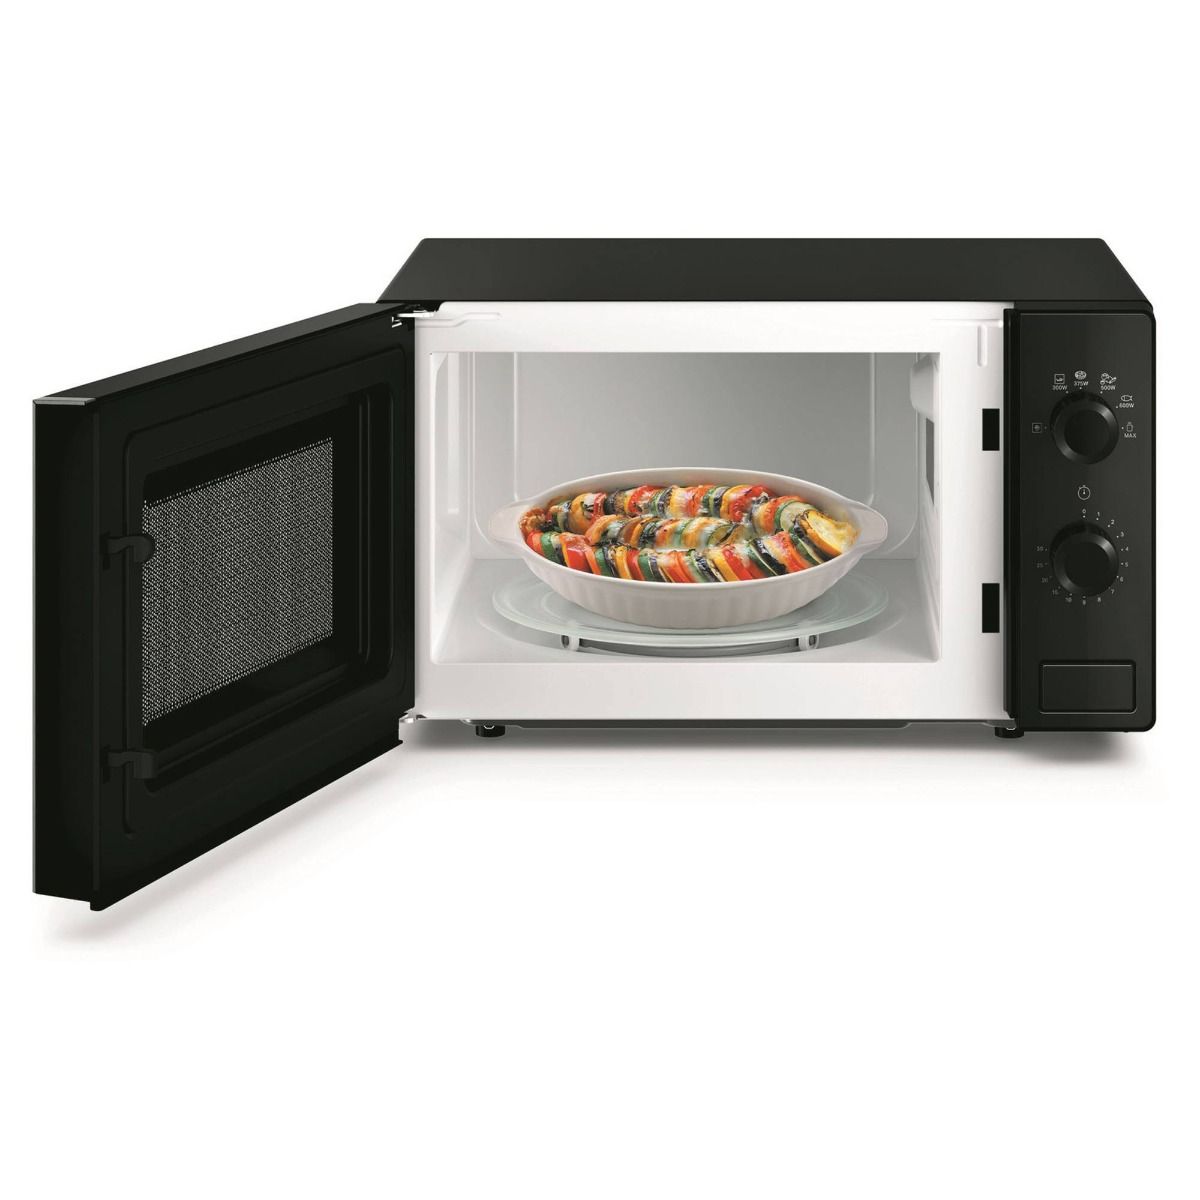 Hot microwave